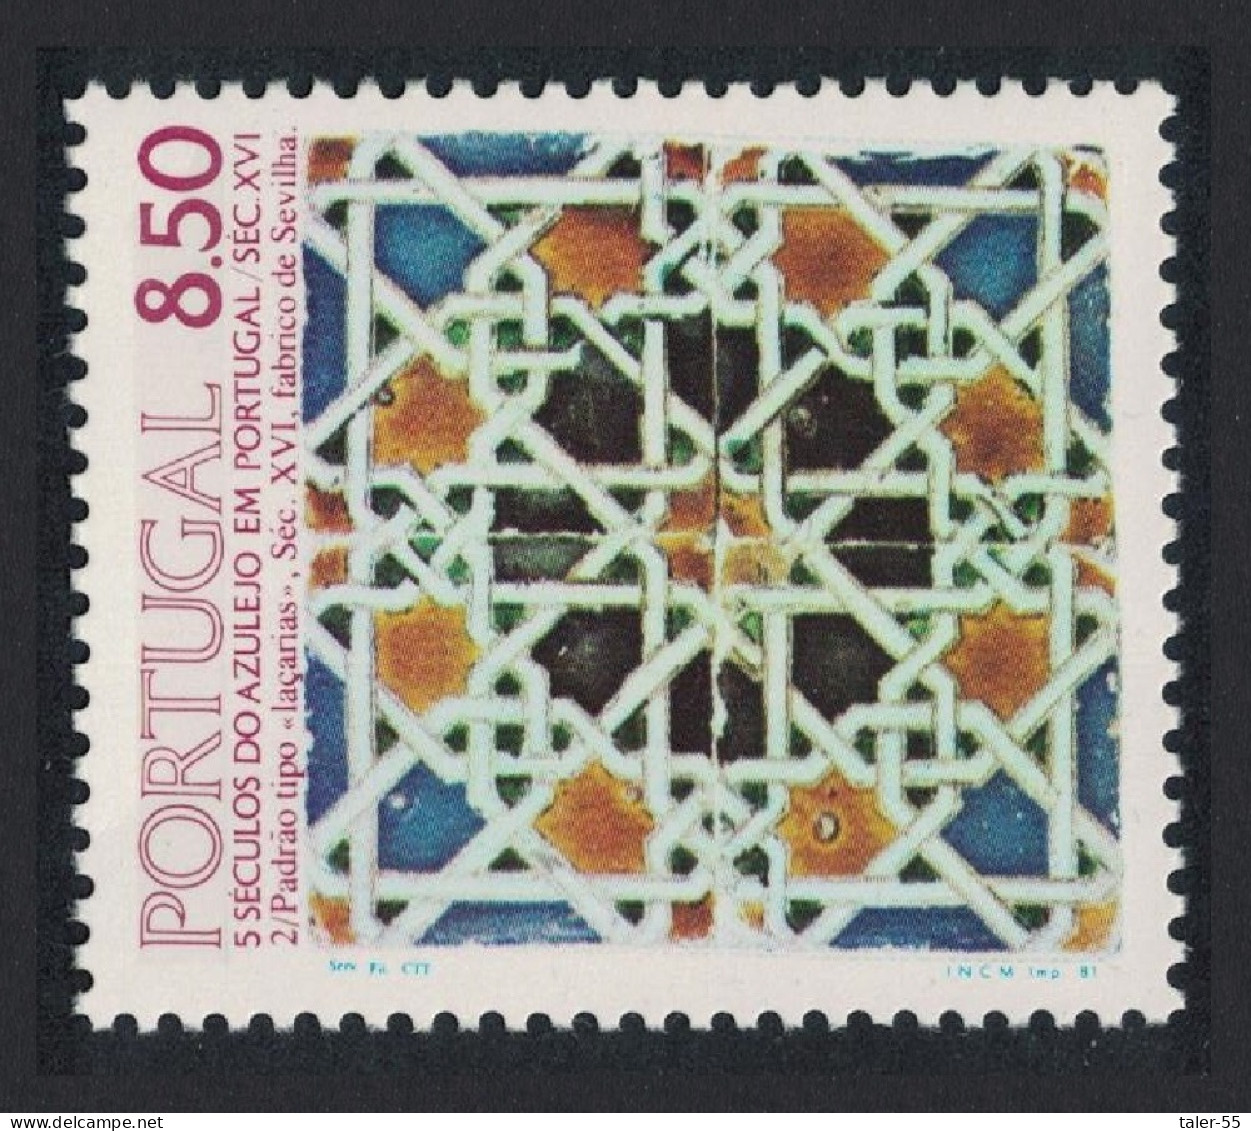 Portugal Tiles 2nd Series 1981 MNH SG#1843 - Neufs